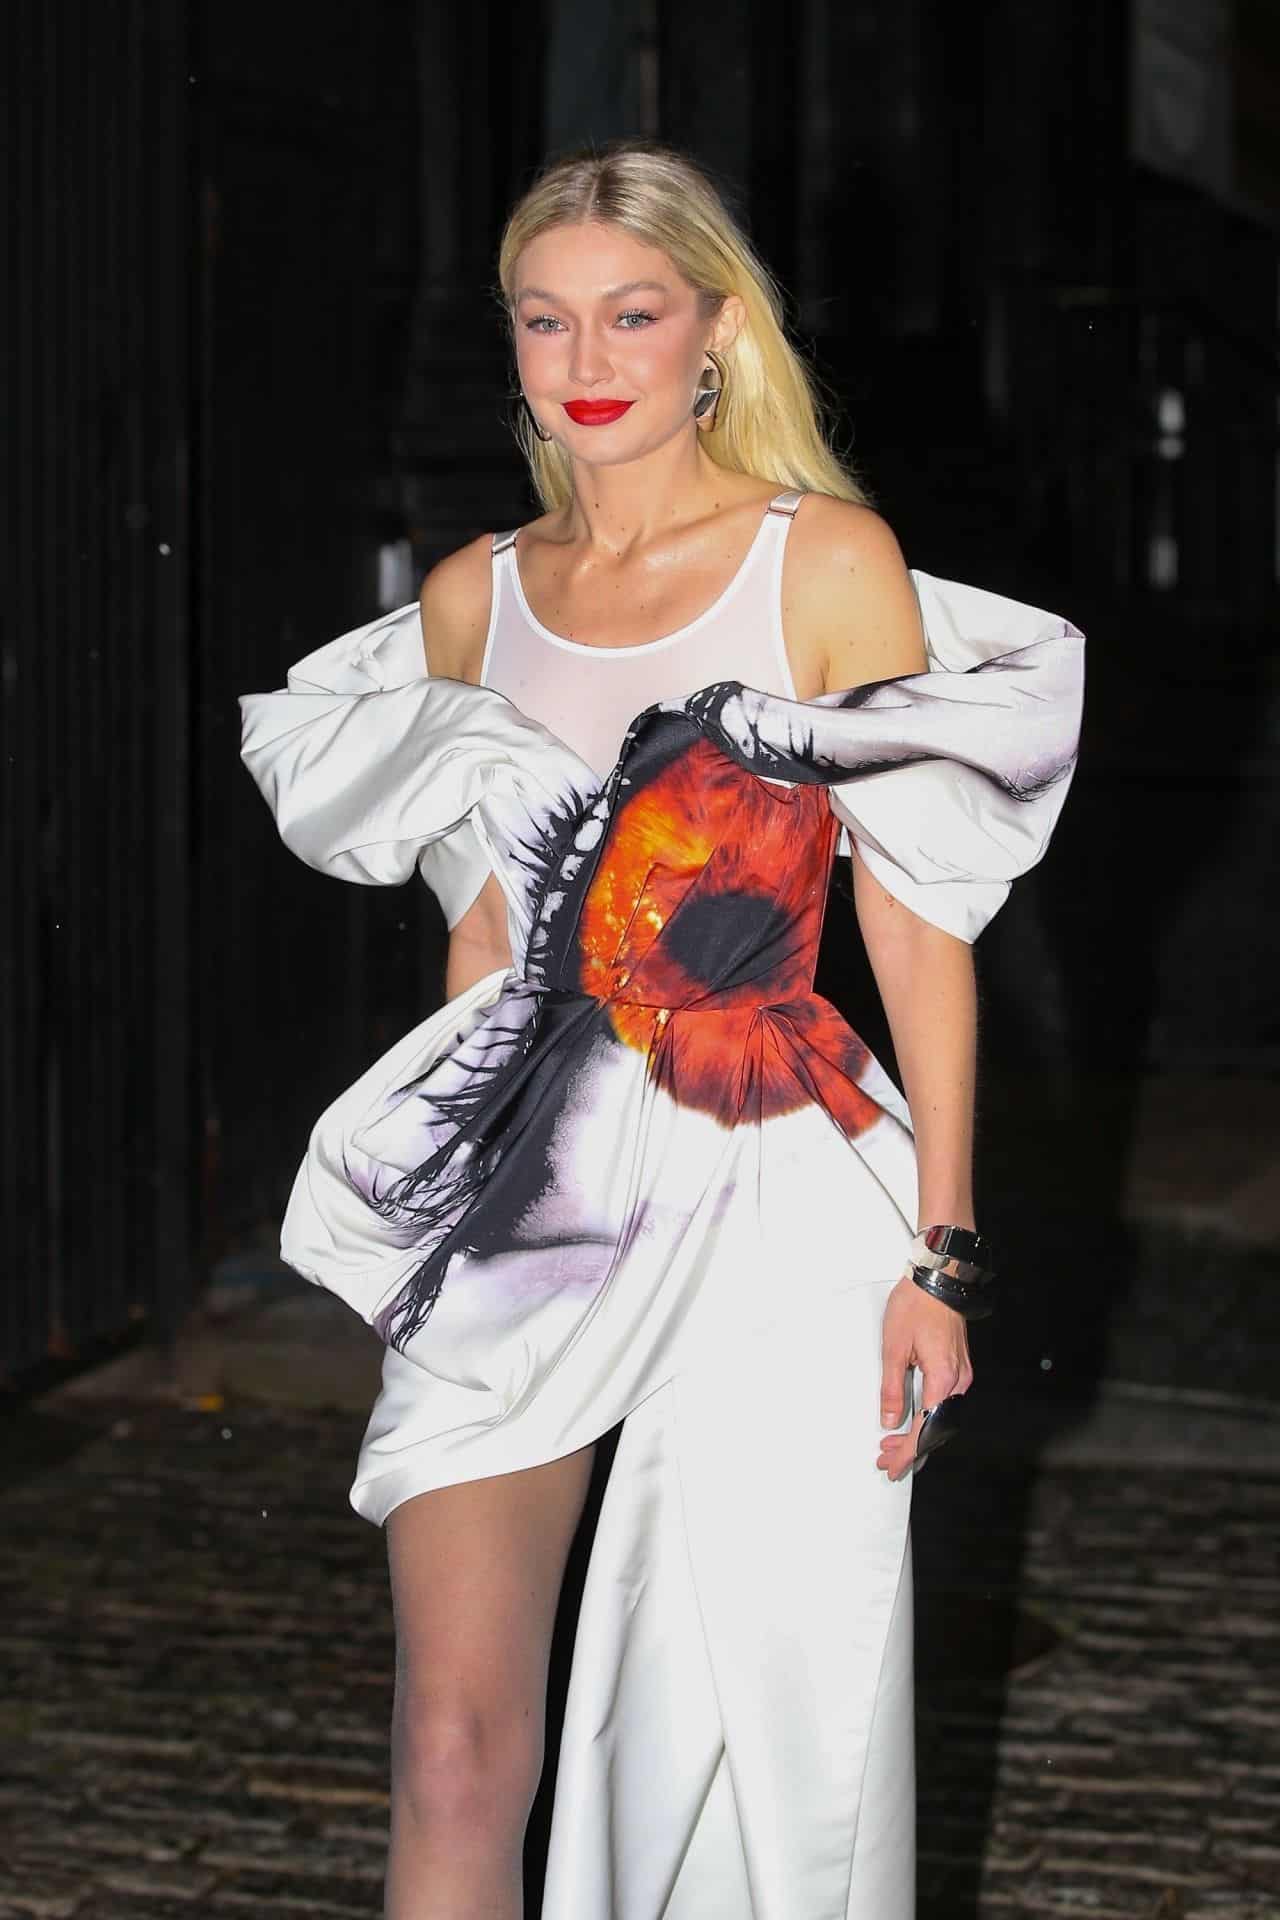 Gigi Hadid in Chic White Mini Dress at "Next in Fashion" Season 2 Party